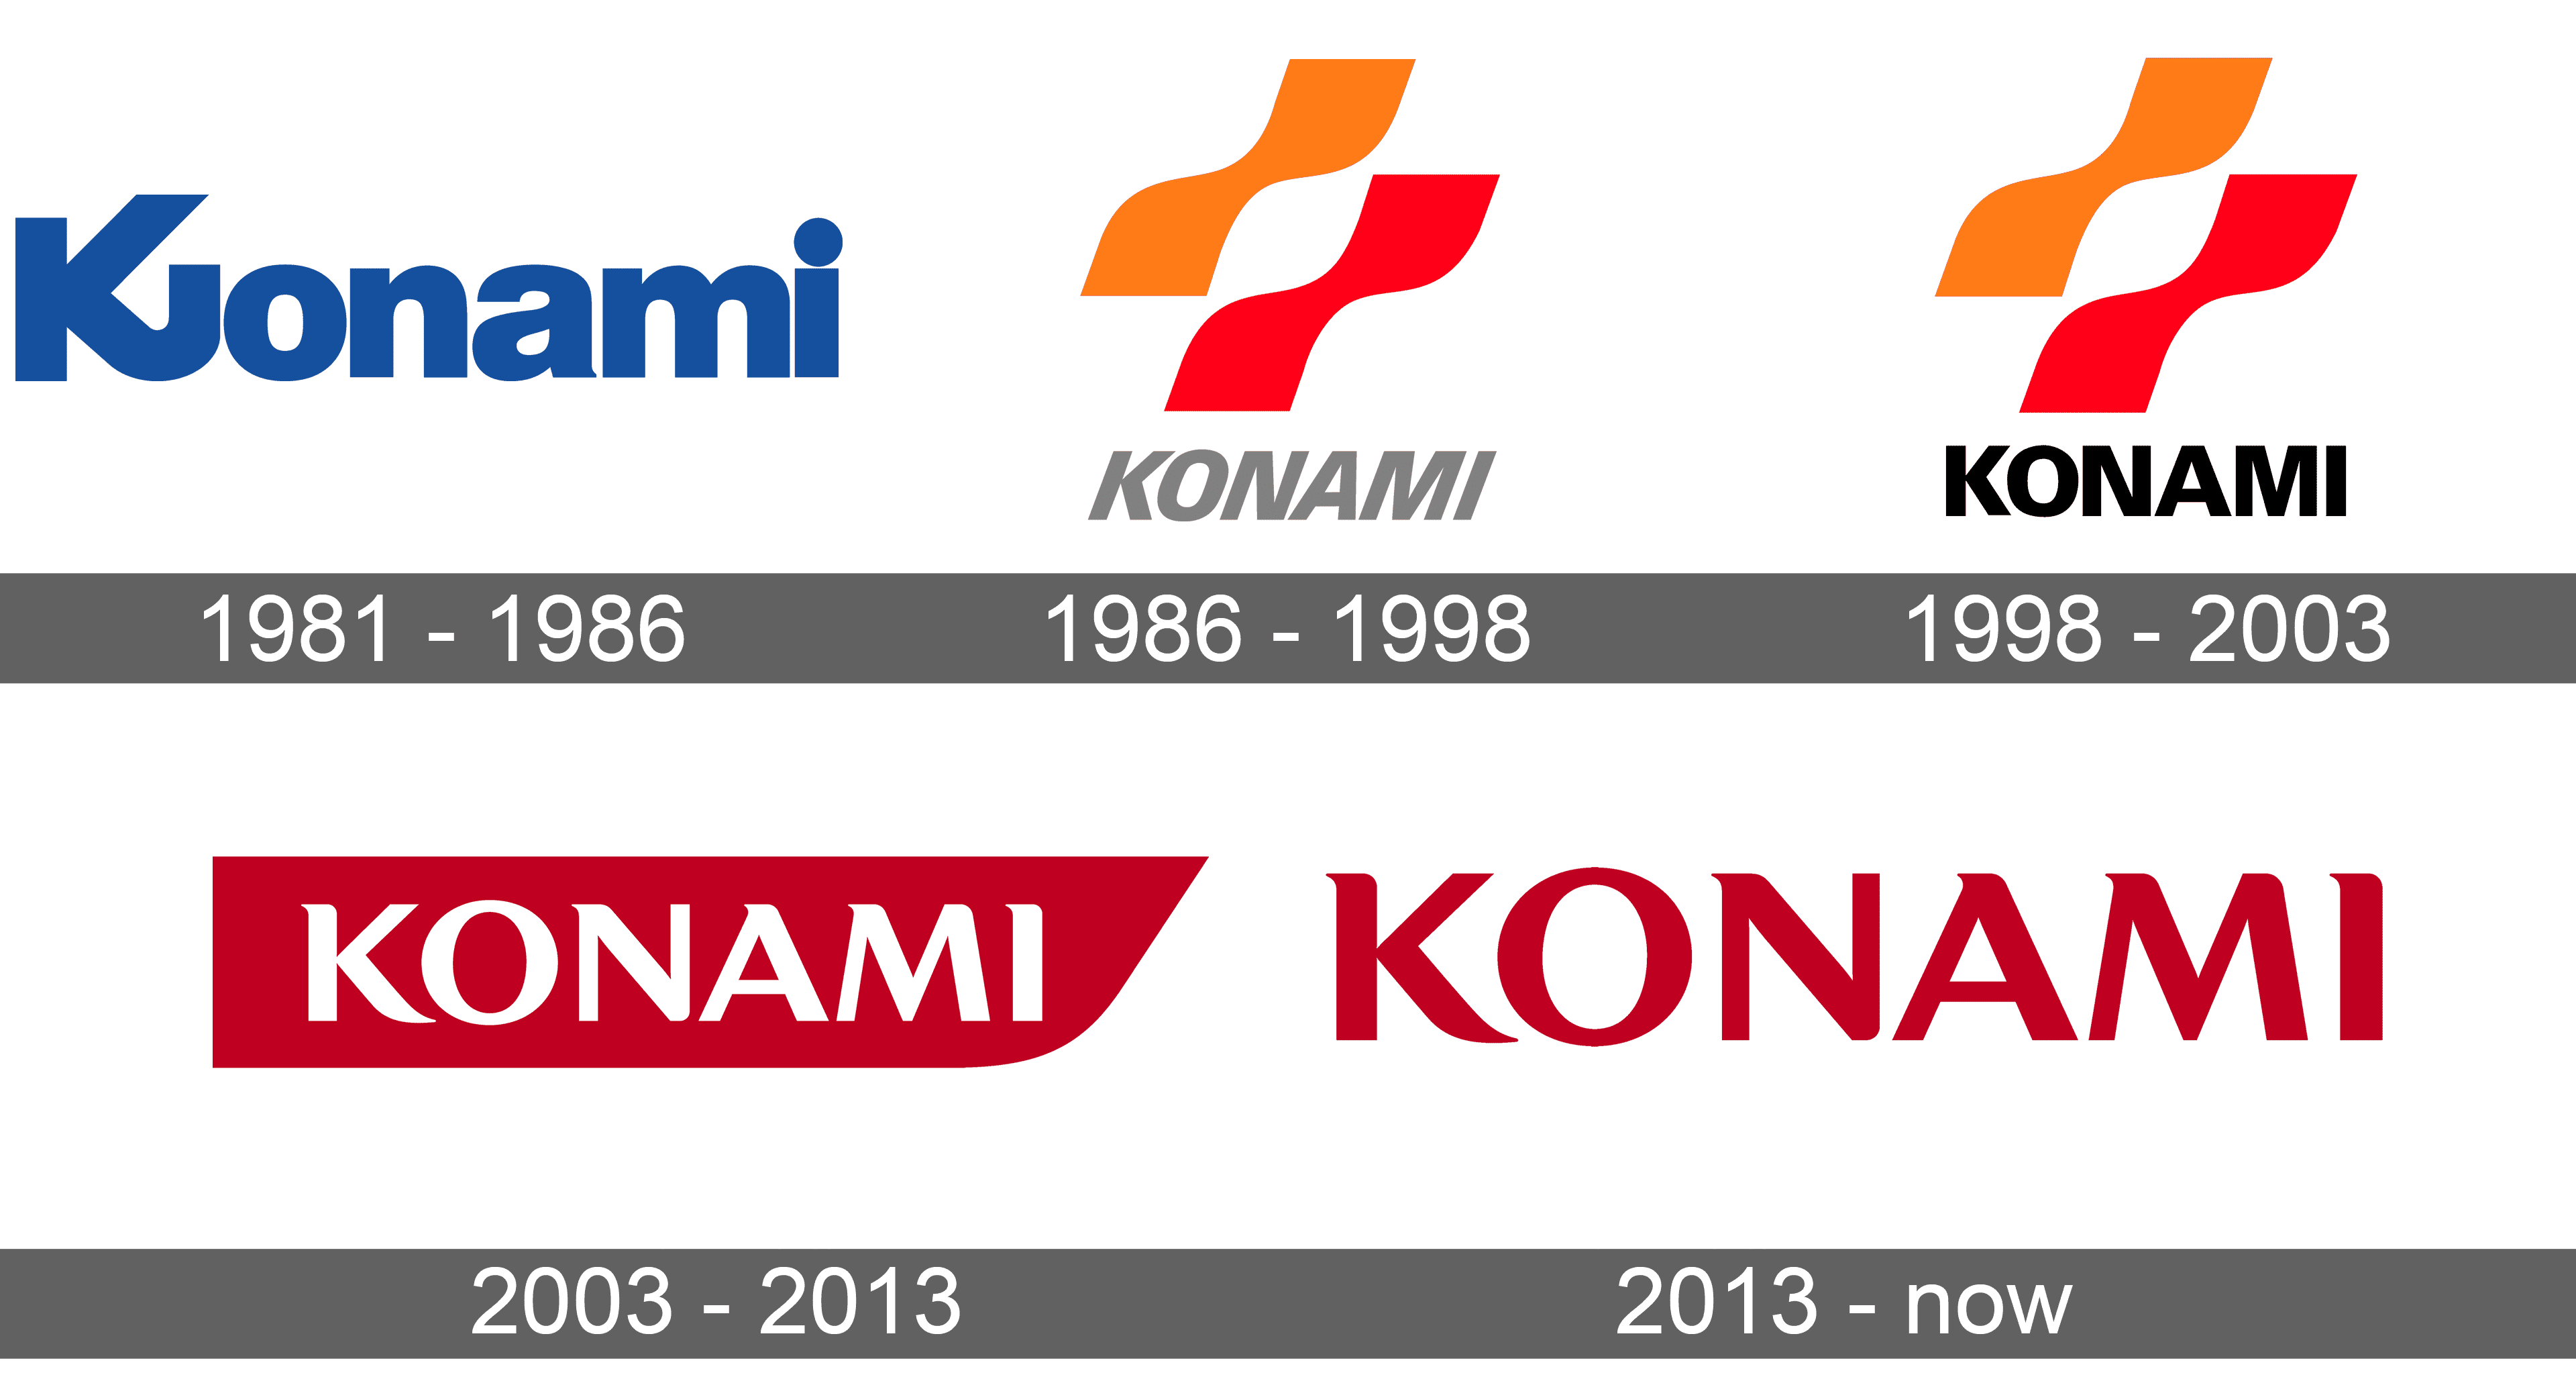 konami logo vector